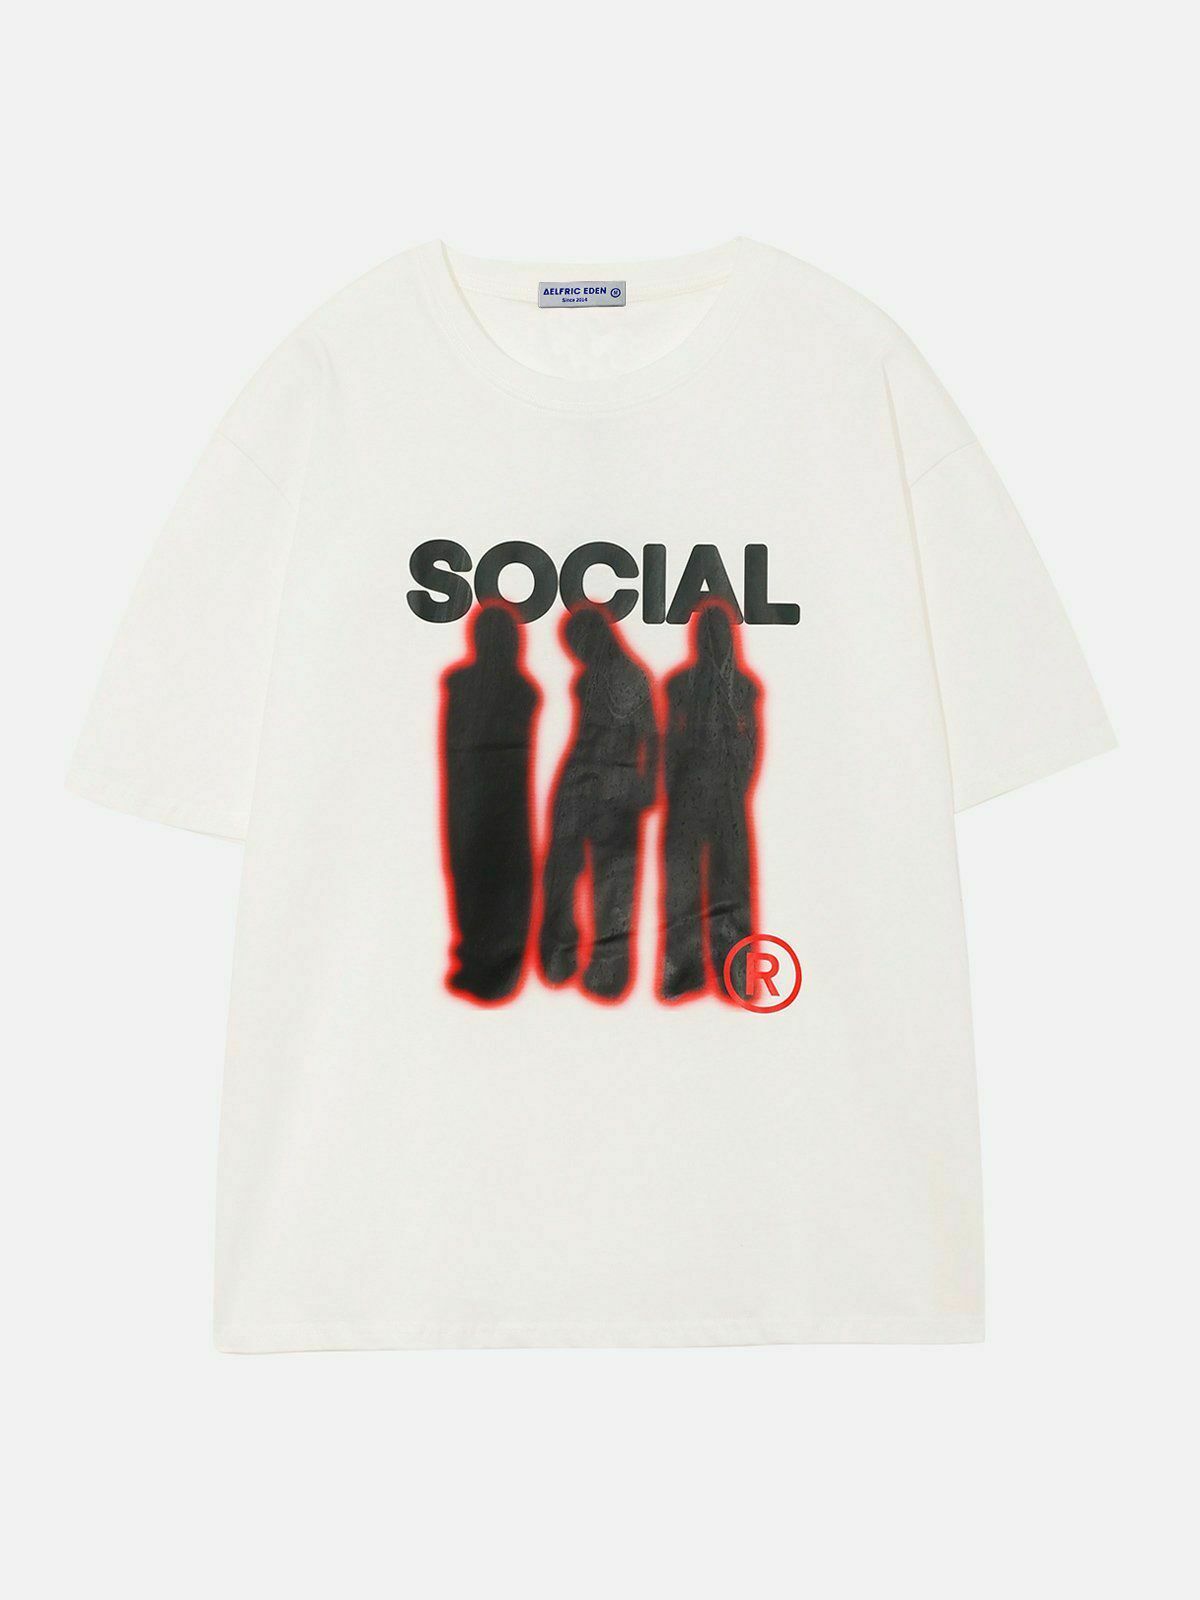 youthful social club tee   exclusive streetwear design 8570